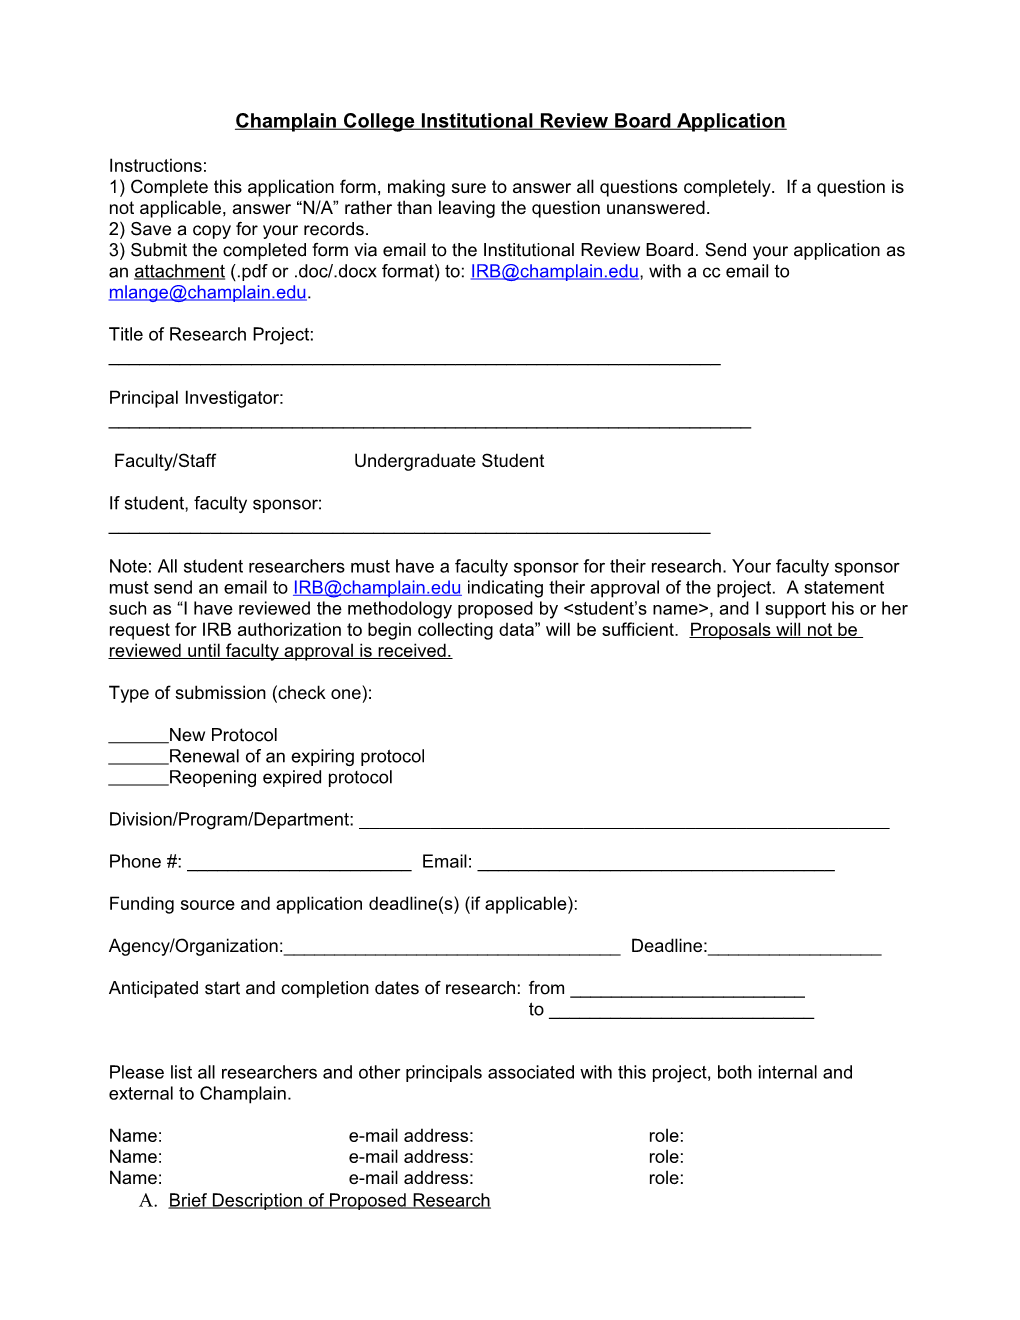 Colorado College IRB Application Draft (12/5/06)